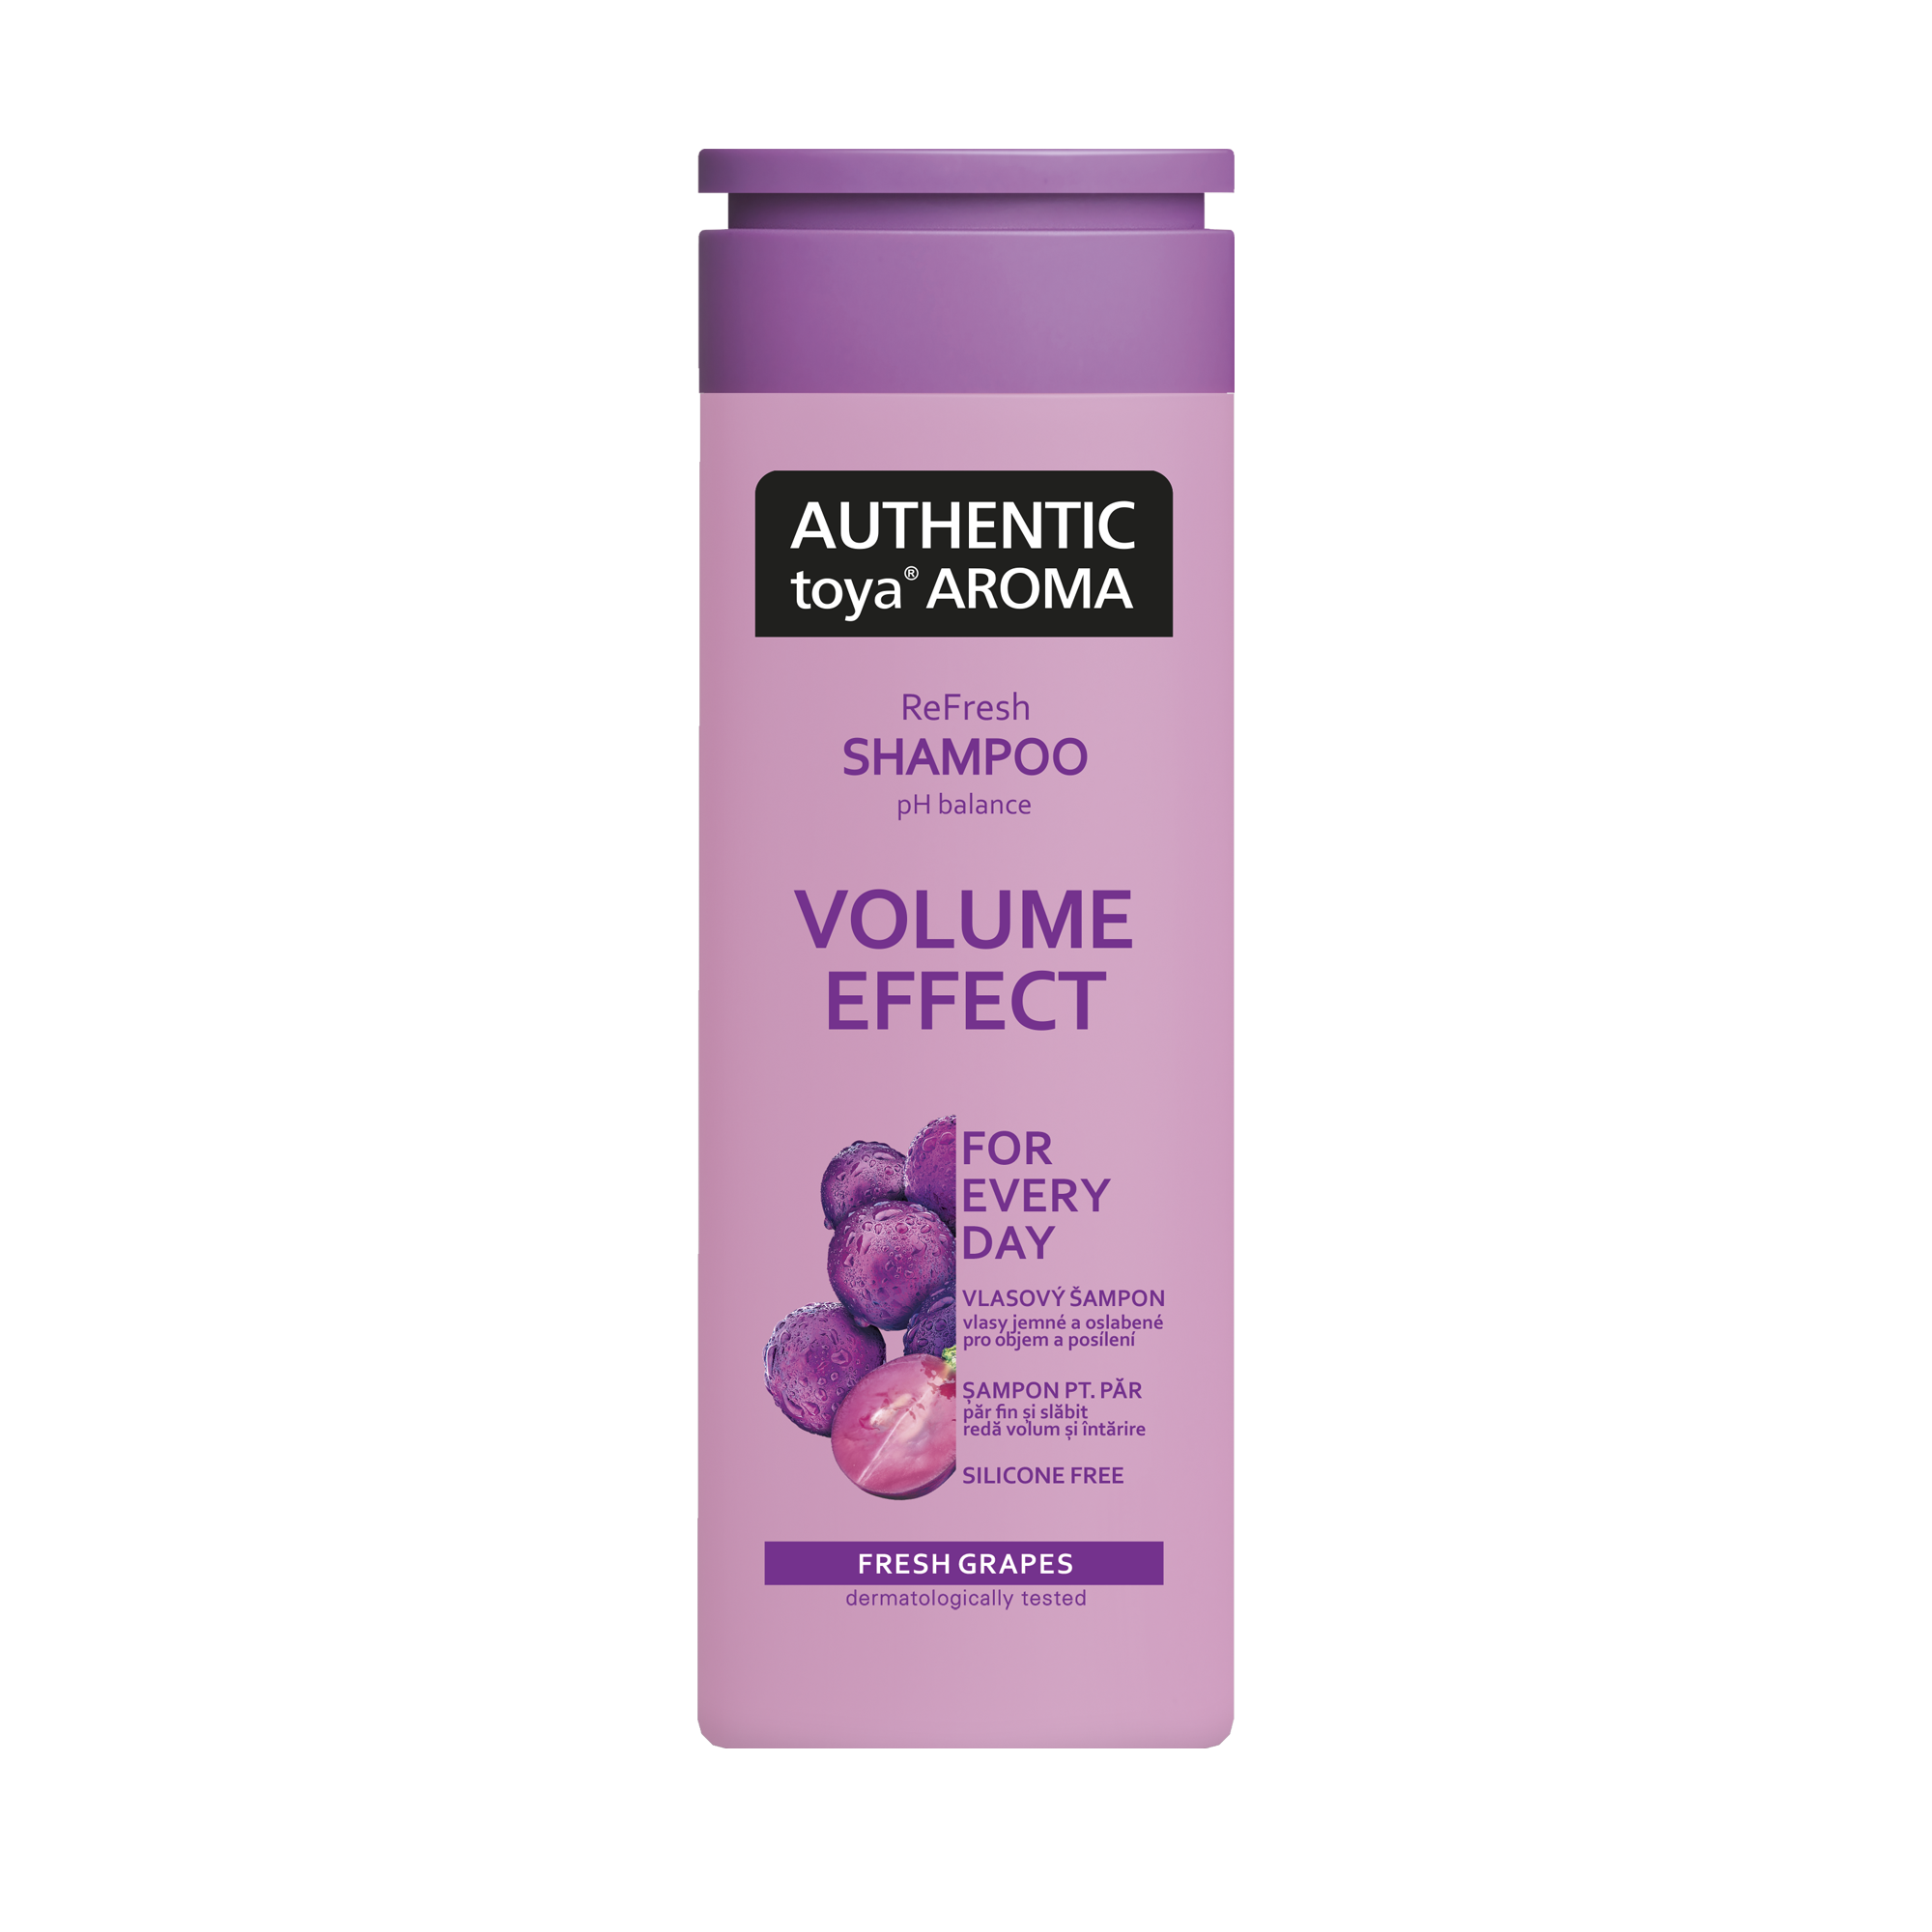 AUTHENTIC toya AROMA vlasový šampón Volume Effect